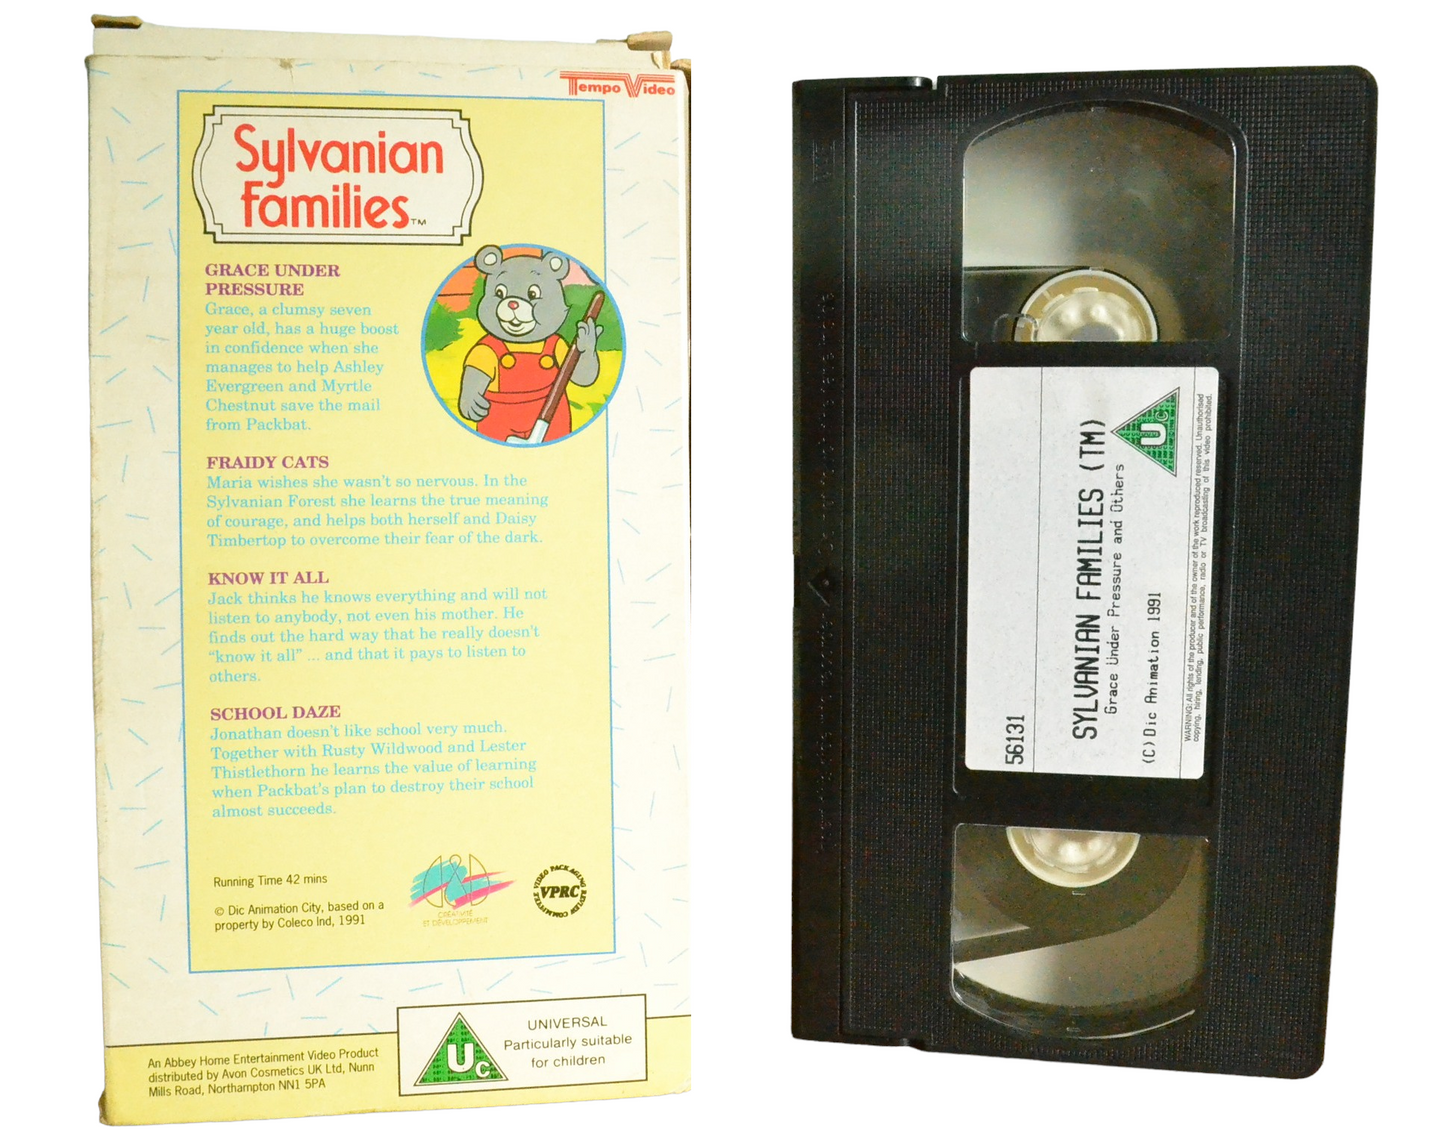 Sylvanian Families - Tabitha St. Germain - Tempo Video - Carton - Pal - VHS-